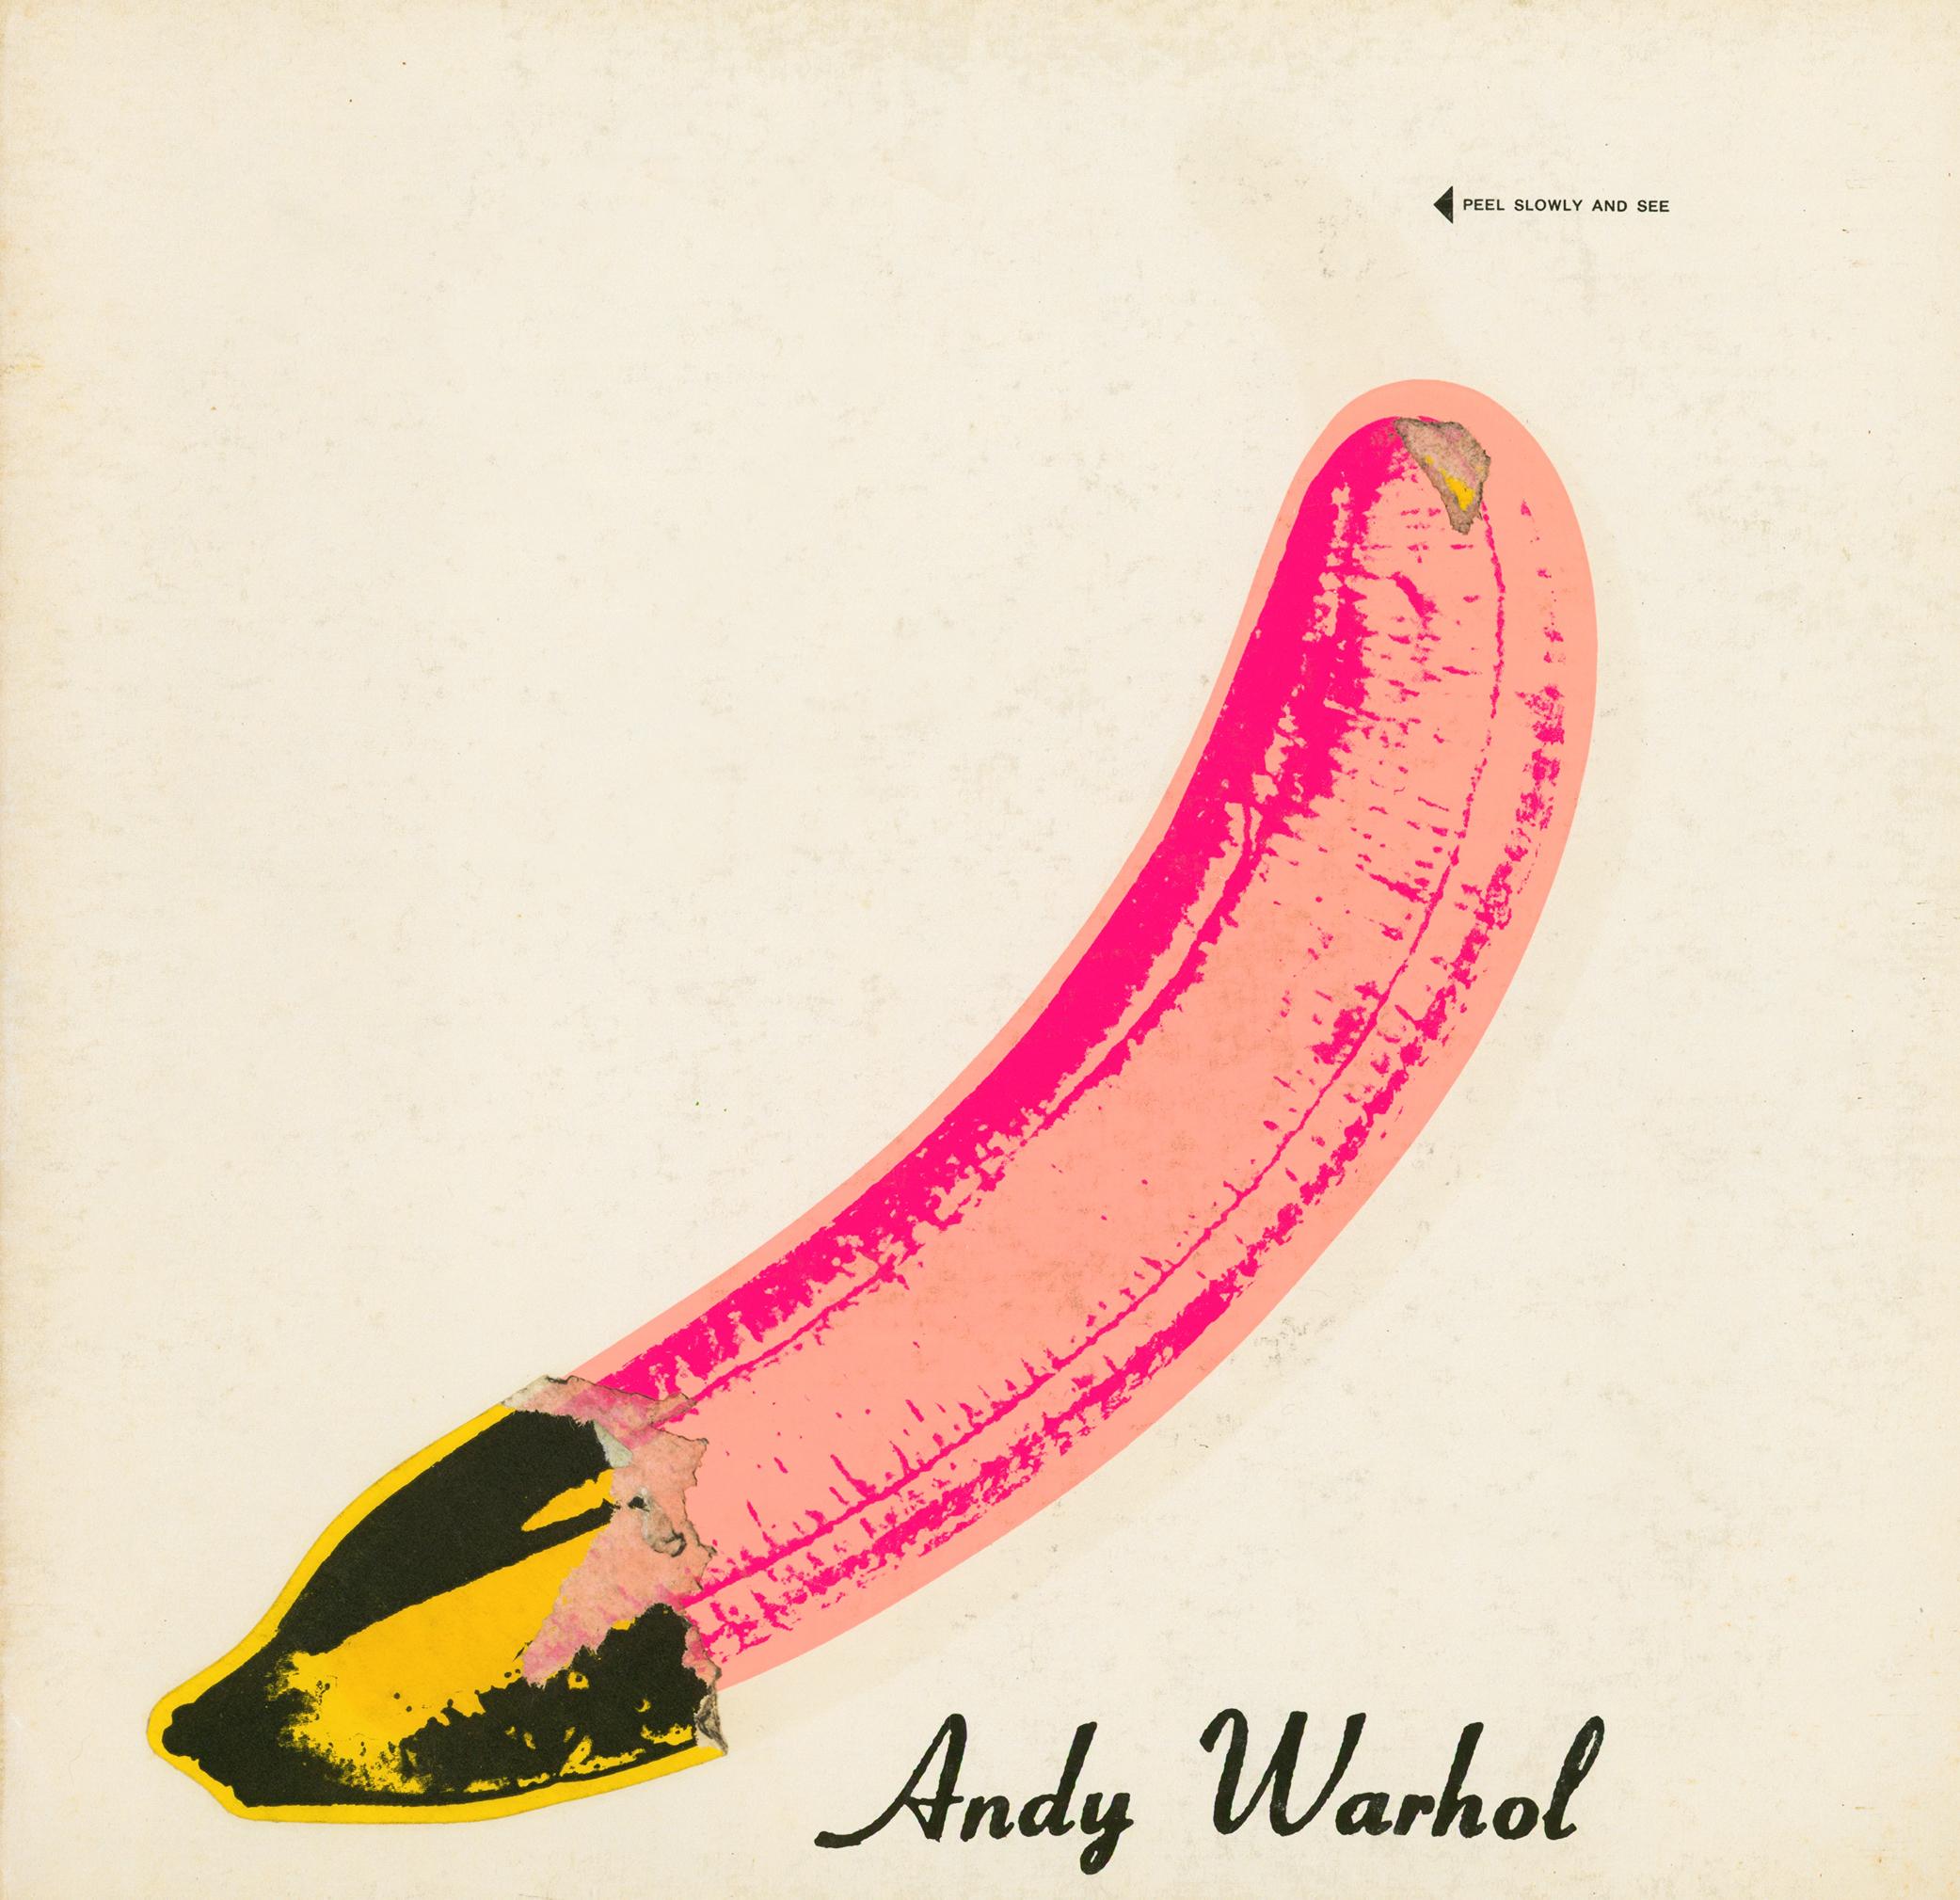 Andy Warhol Banana: Nico & The Velvet Underground Vinyl Record (set of 4 works) 1